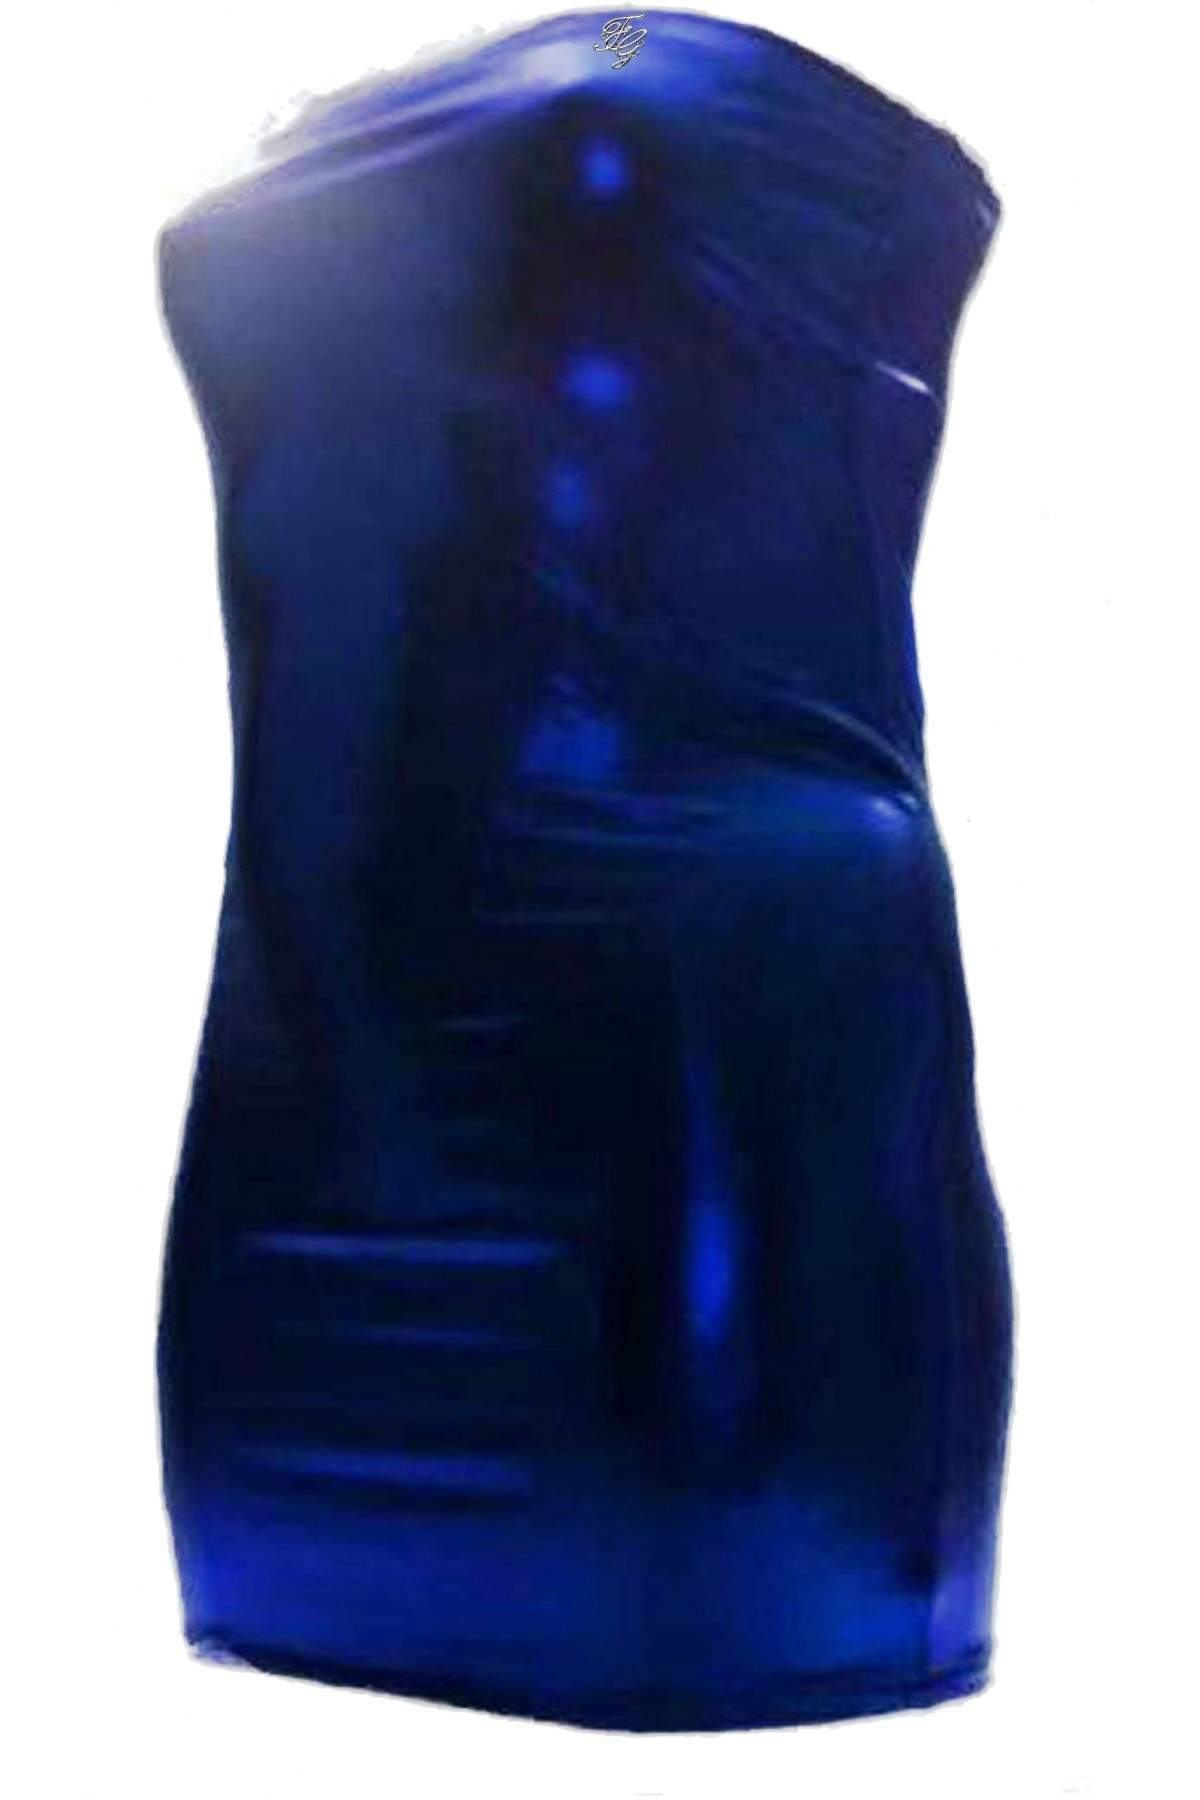 black week Save 15% Leather Look Blue Big Size Bandeau Dress - 